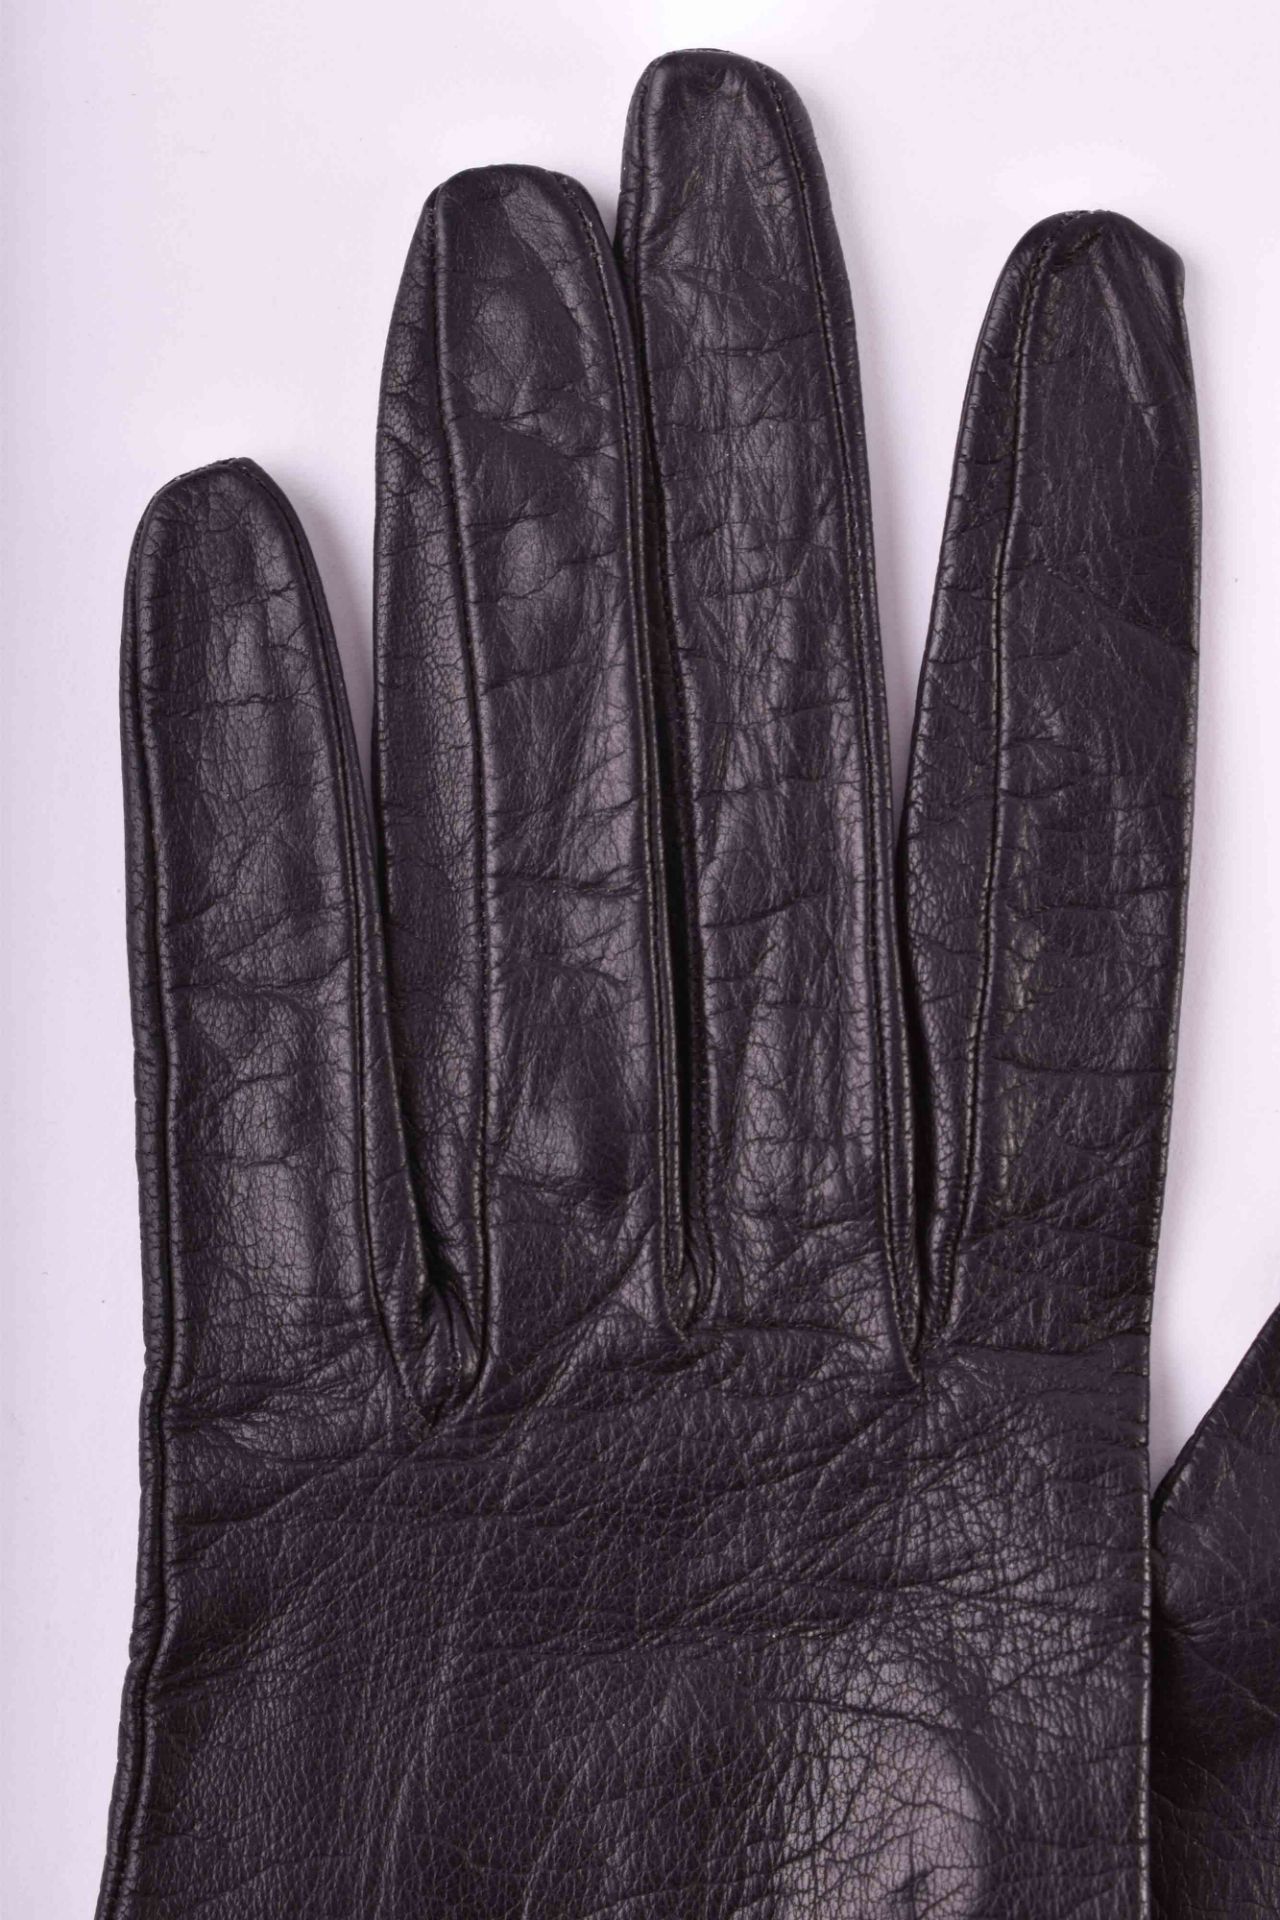  Women's leather gloves Hermes Paris - Image 2 of 6